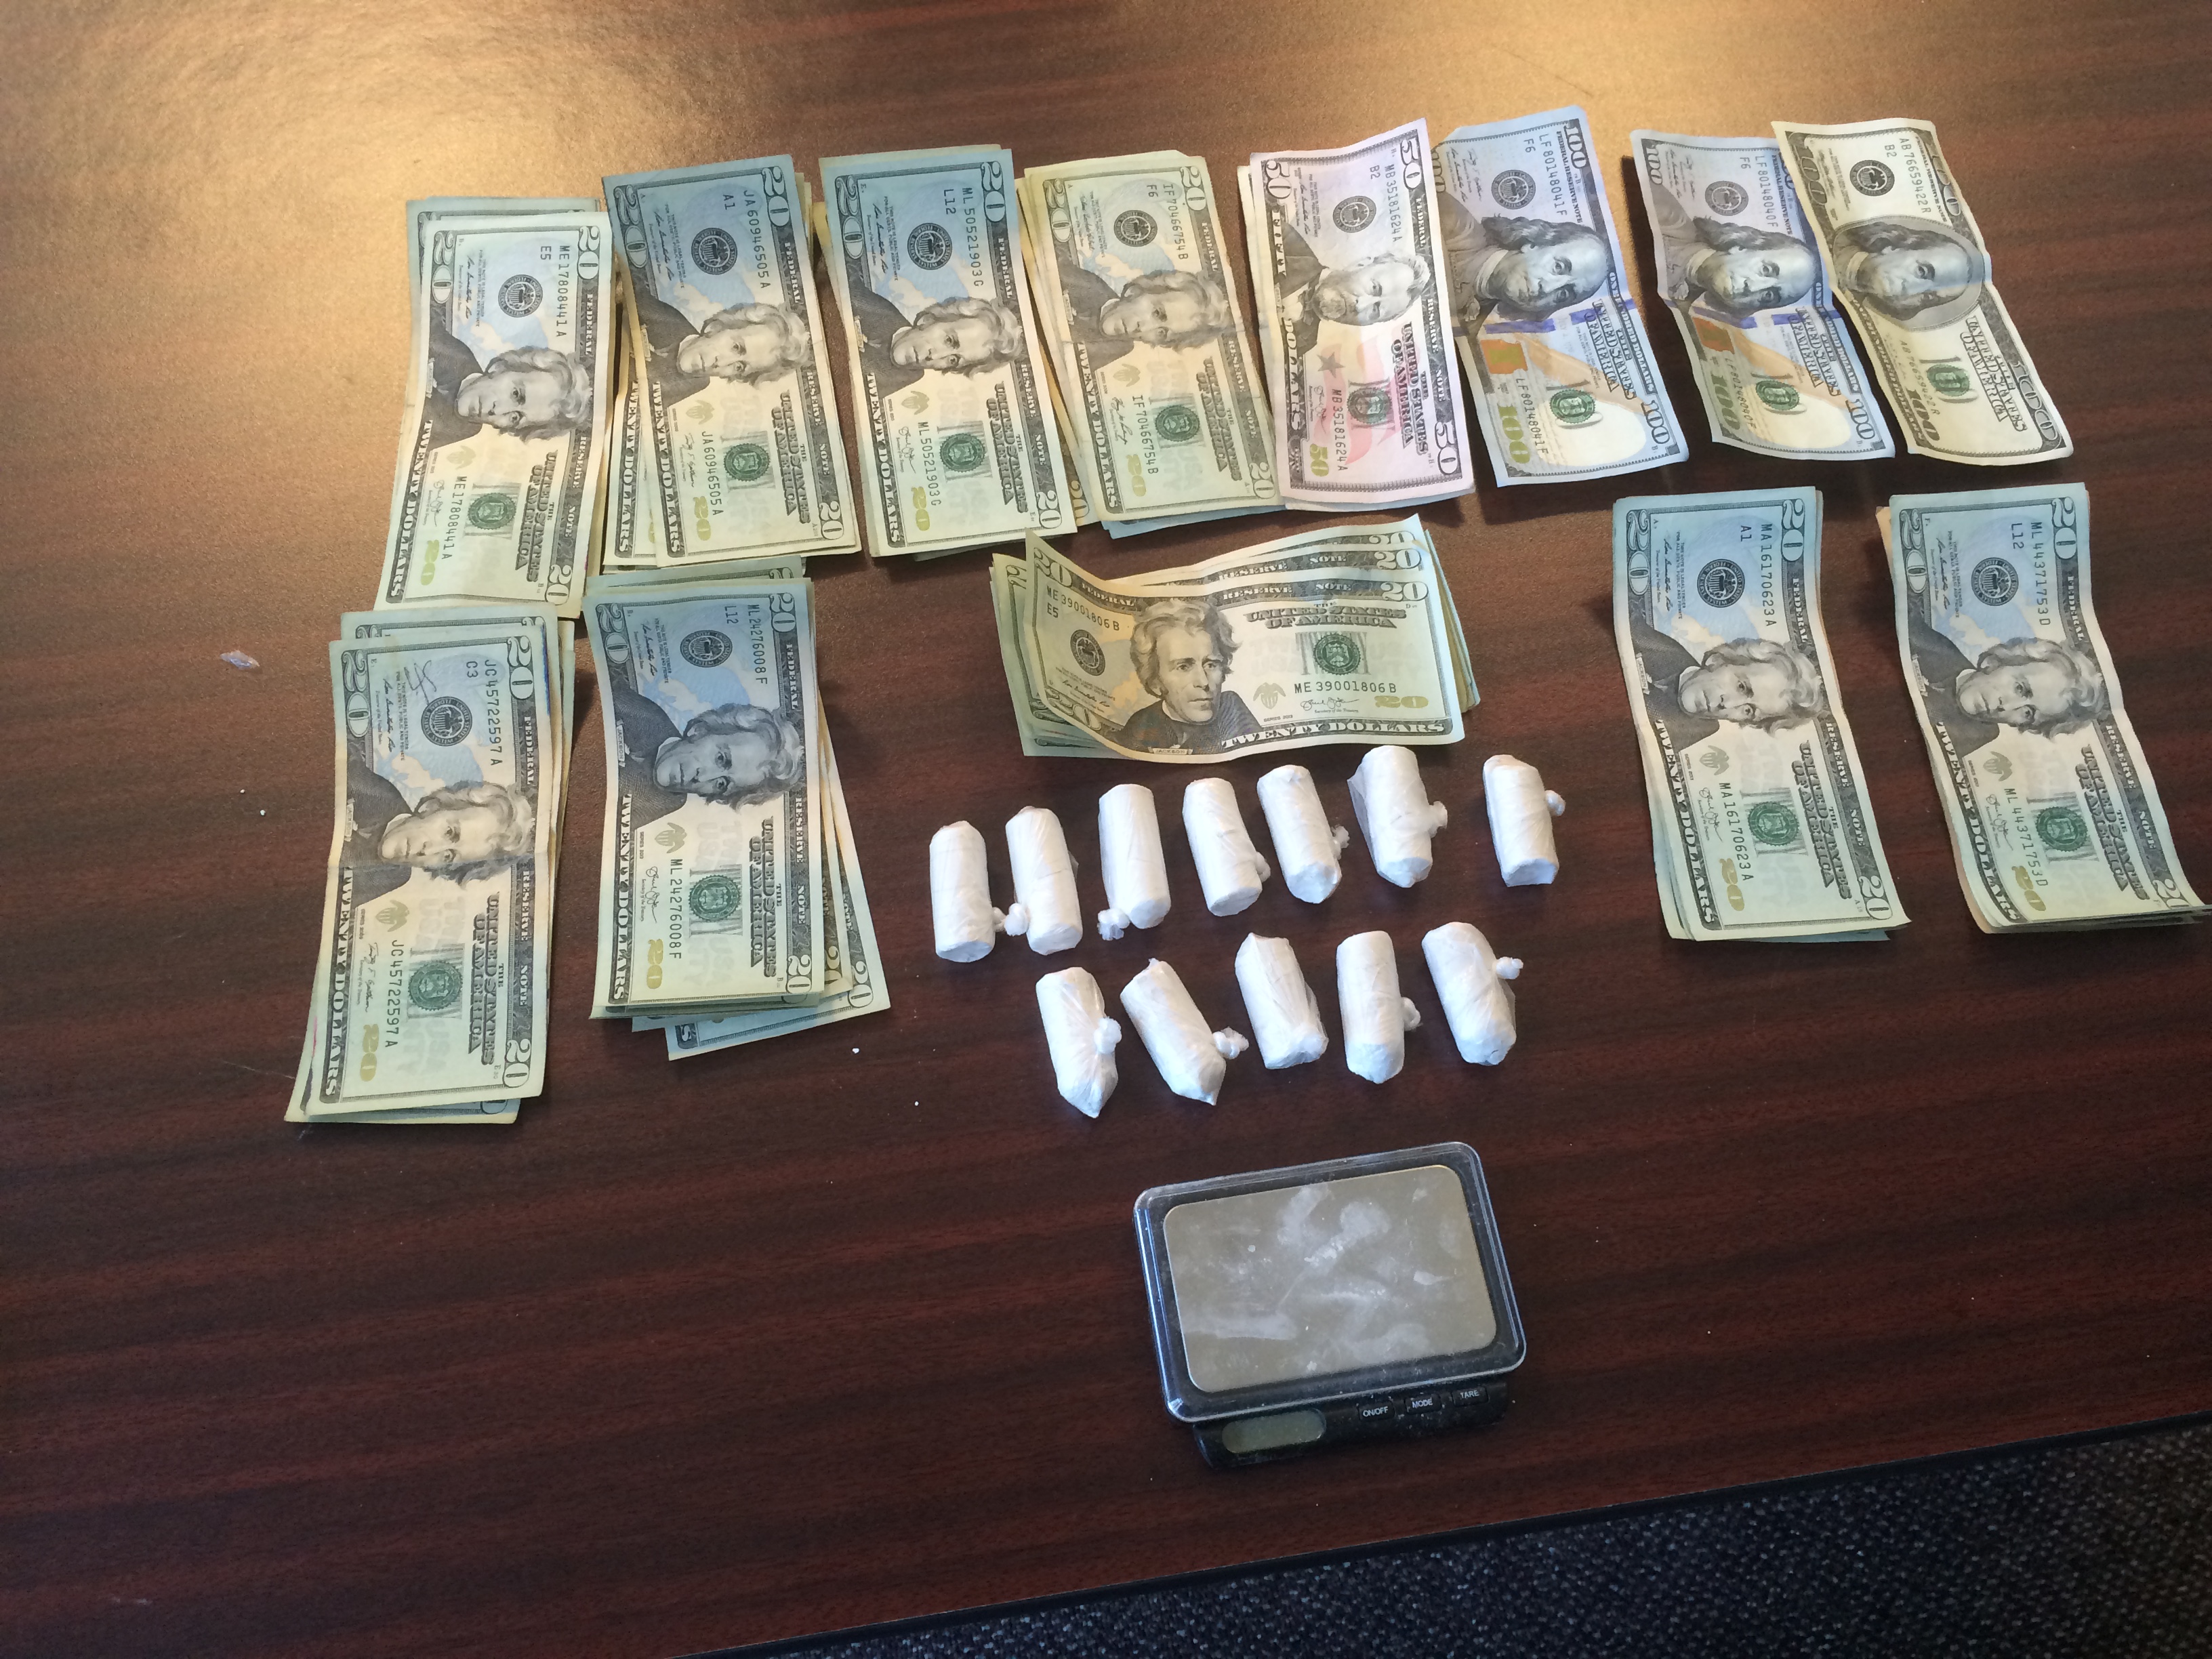 Lawrence Youth Team Laborer Arrested for Trafficking Heroin, Police Seize $10K in Heroin